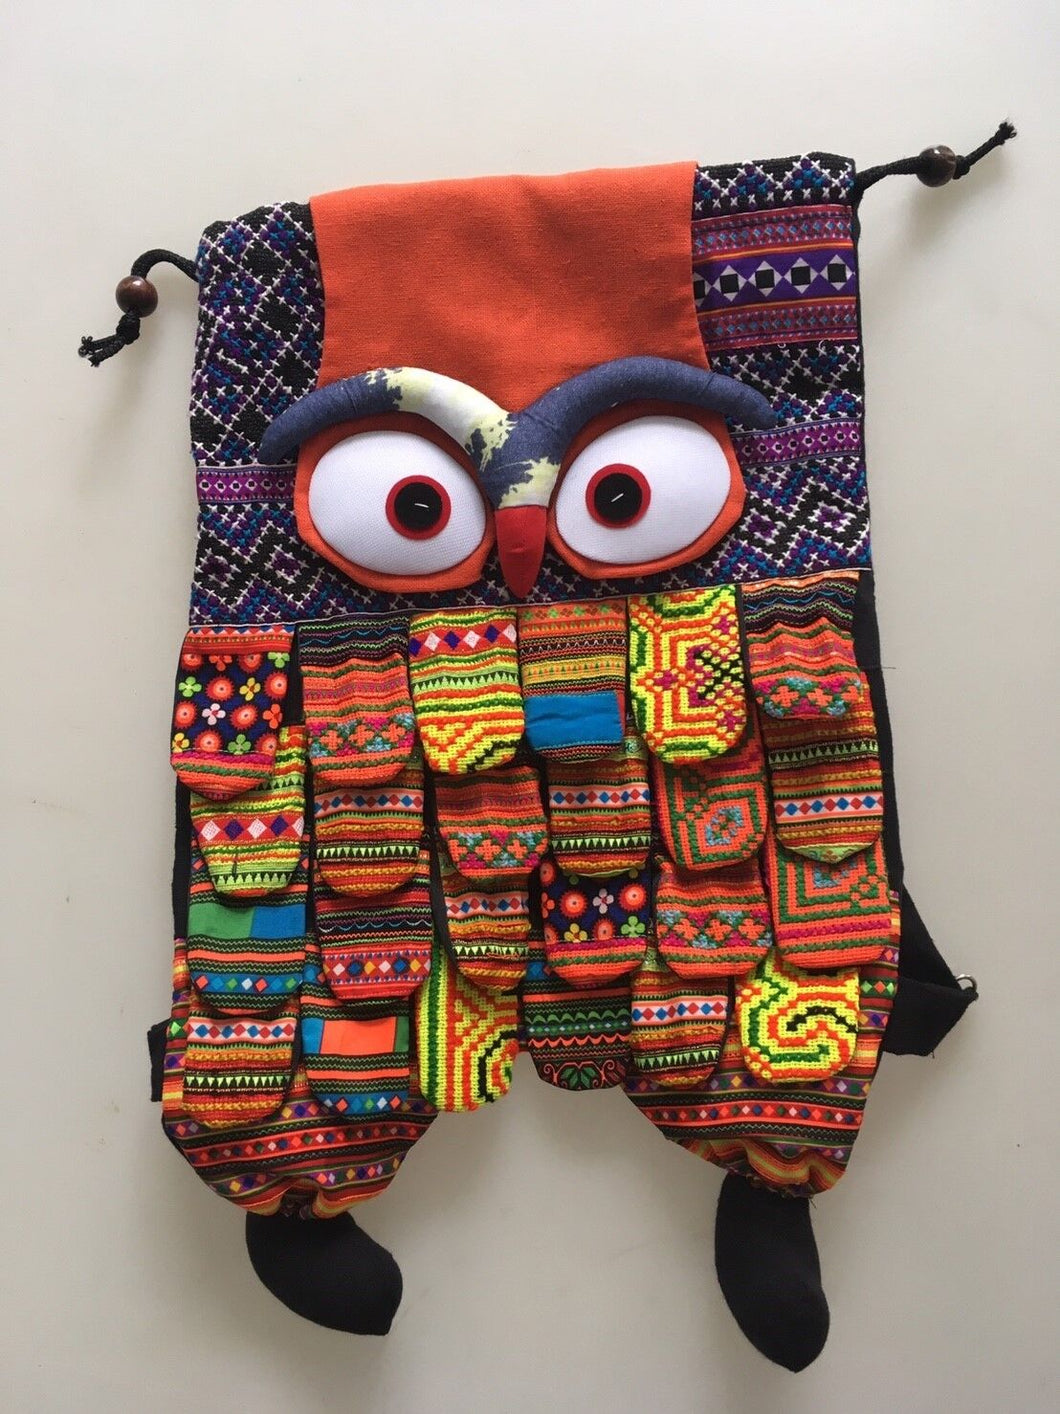 Owl Backpack bag fabric handmade sewing pattern bird animal cute nice gifts V.2